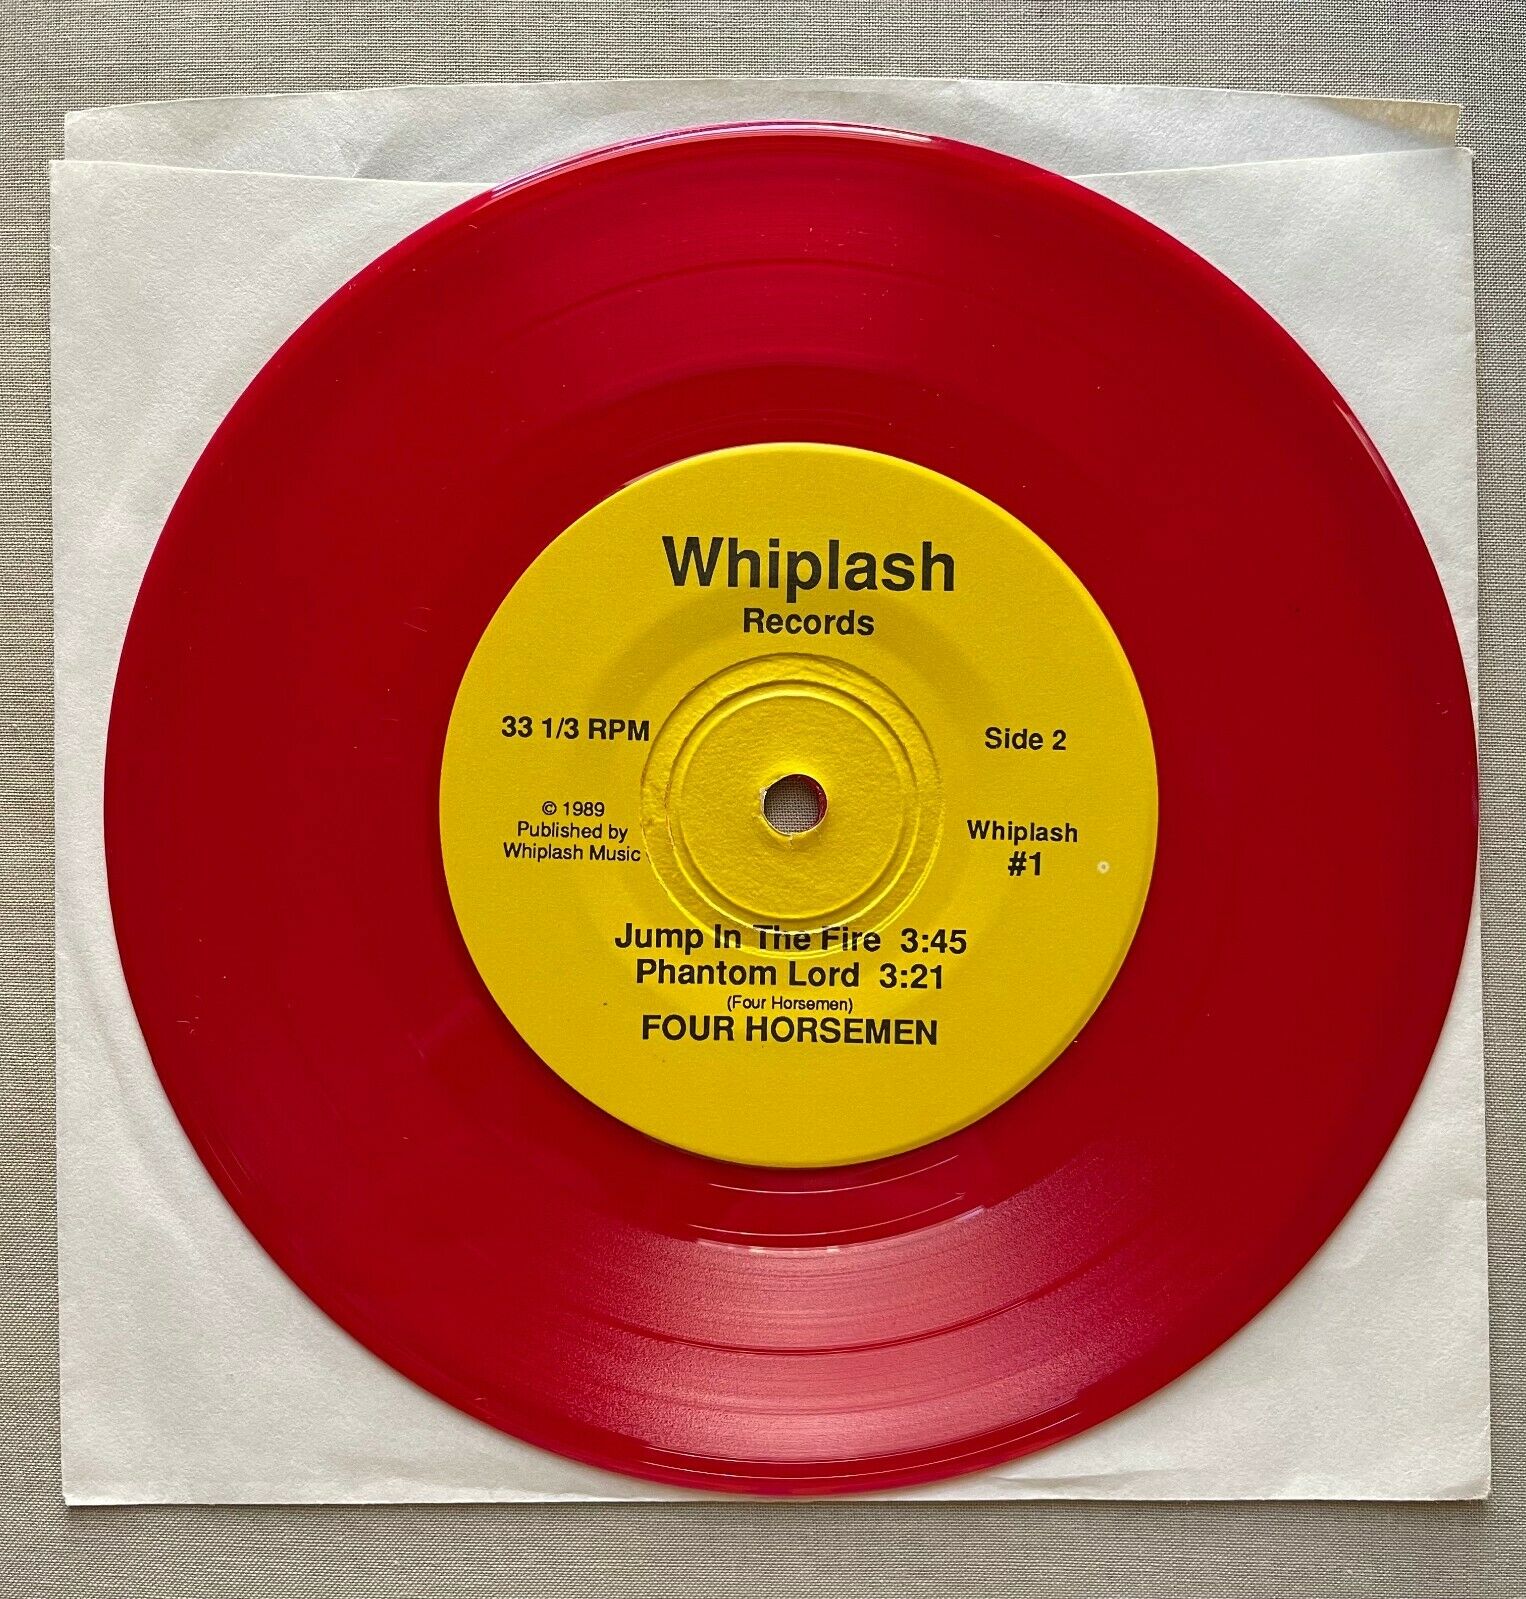 METALLICA Until It Sleeps Red Vinyl 10 Thrash Speed Metal Vinyl Album  Gallery #vinylrecords